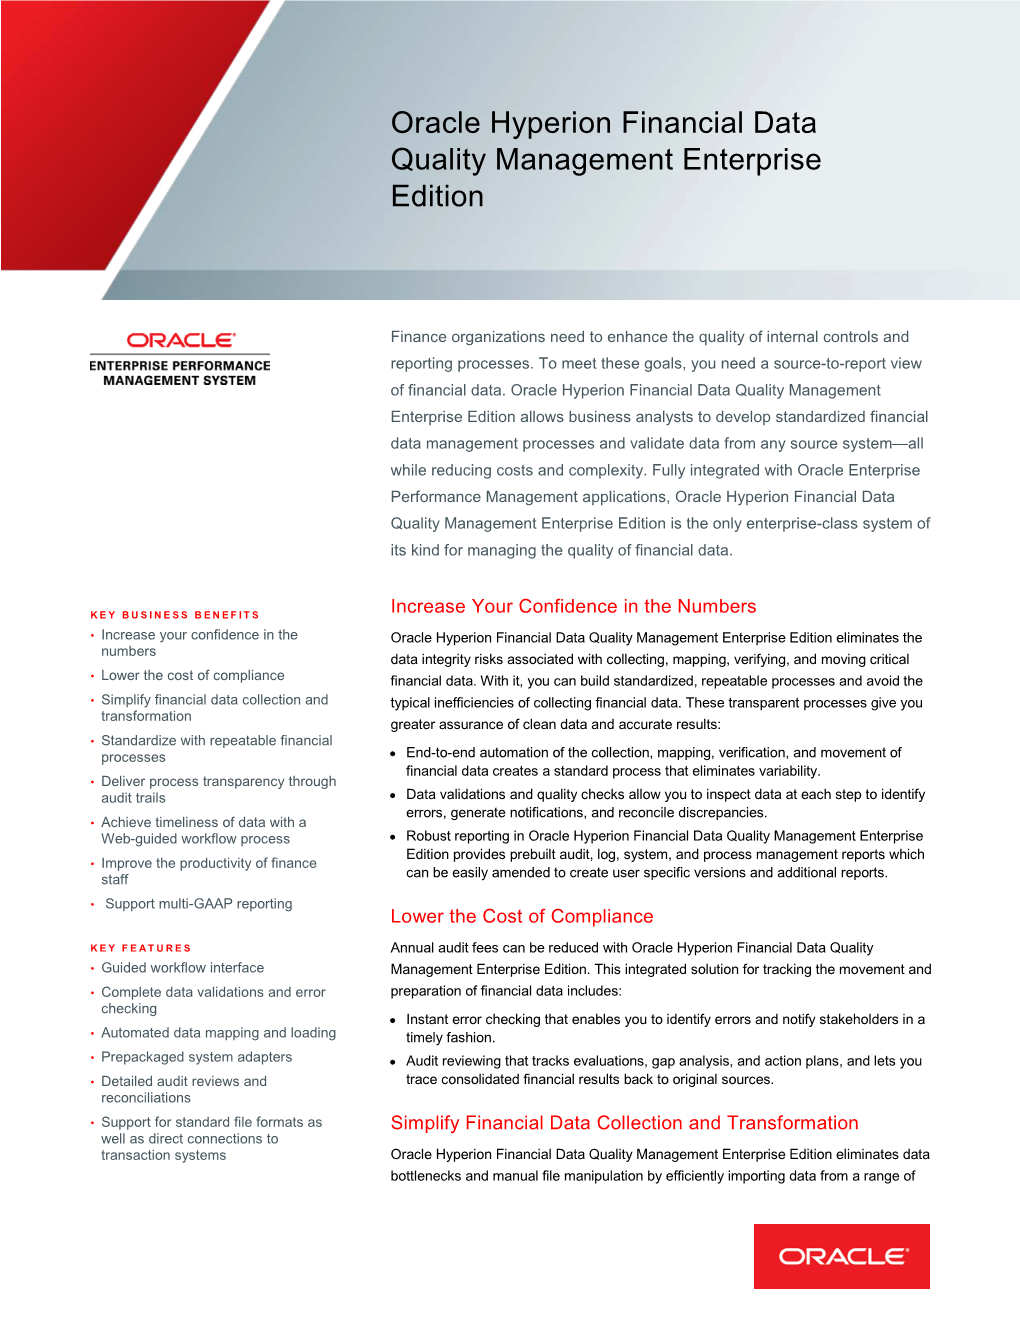 Oracle Hyperion Financial Data Quality Management Enterprise Edition